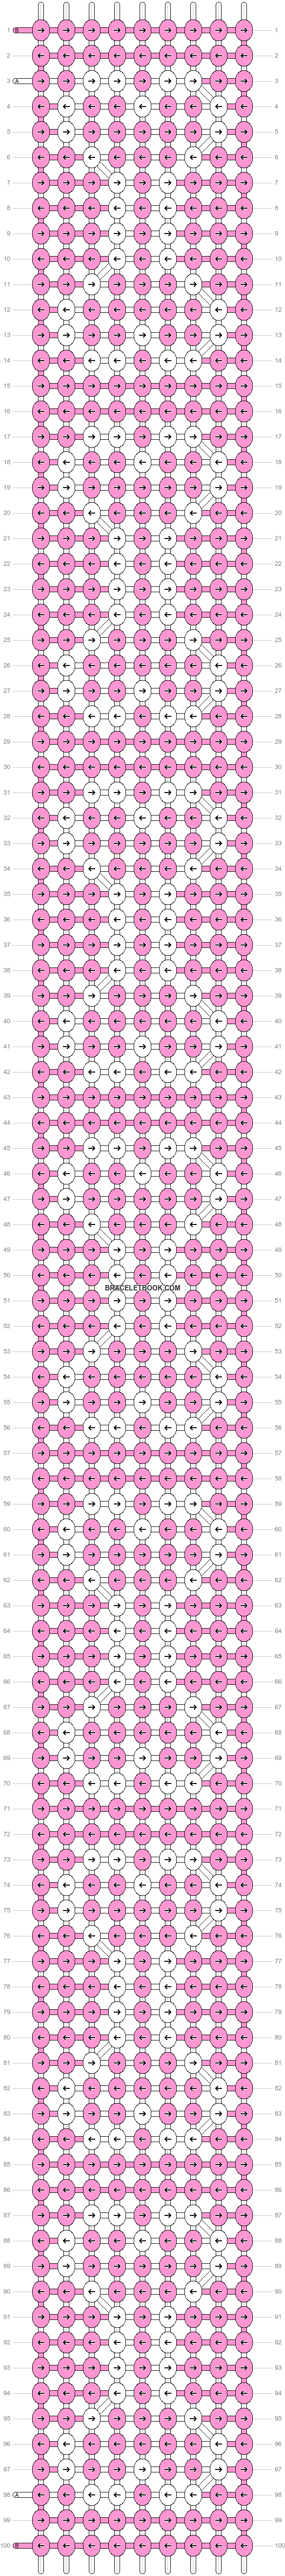 Alpha pattern #48735 variation #77304 pattern